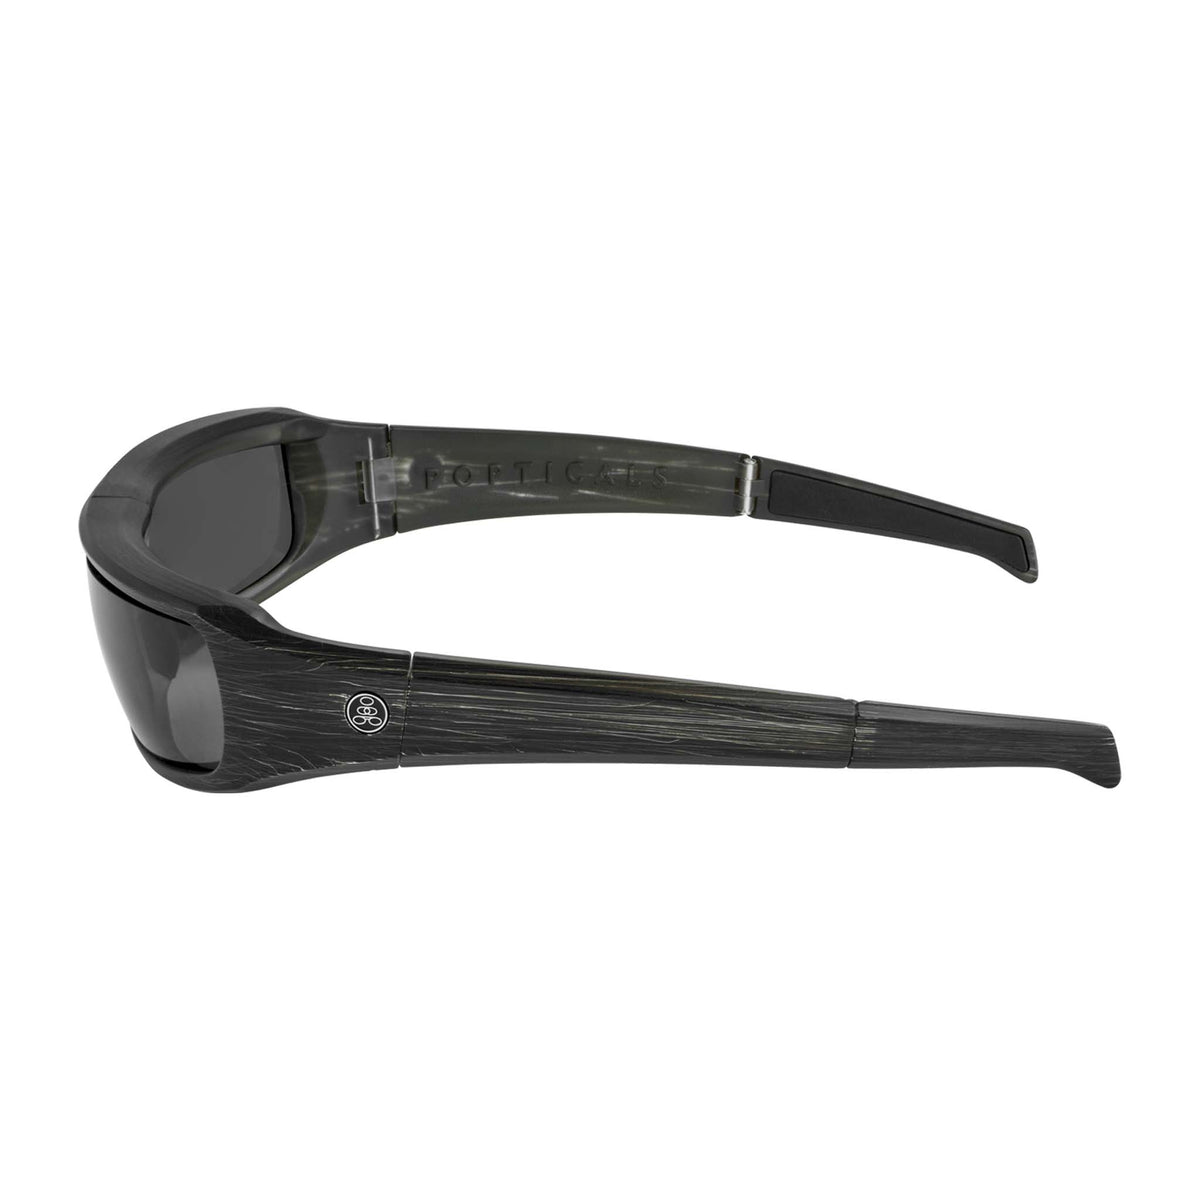 Popticals, Premium Compact Sunglasses, PopSign, 090020-ZUGP, Polarized Sunglasses, Matte Brush Black Frame, Gray Lenses, Side View